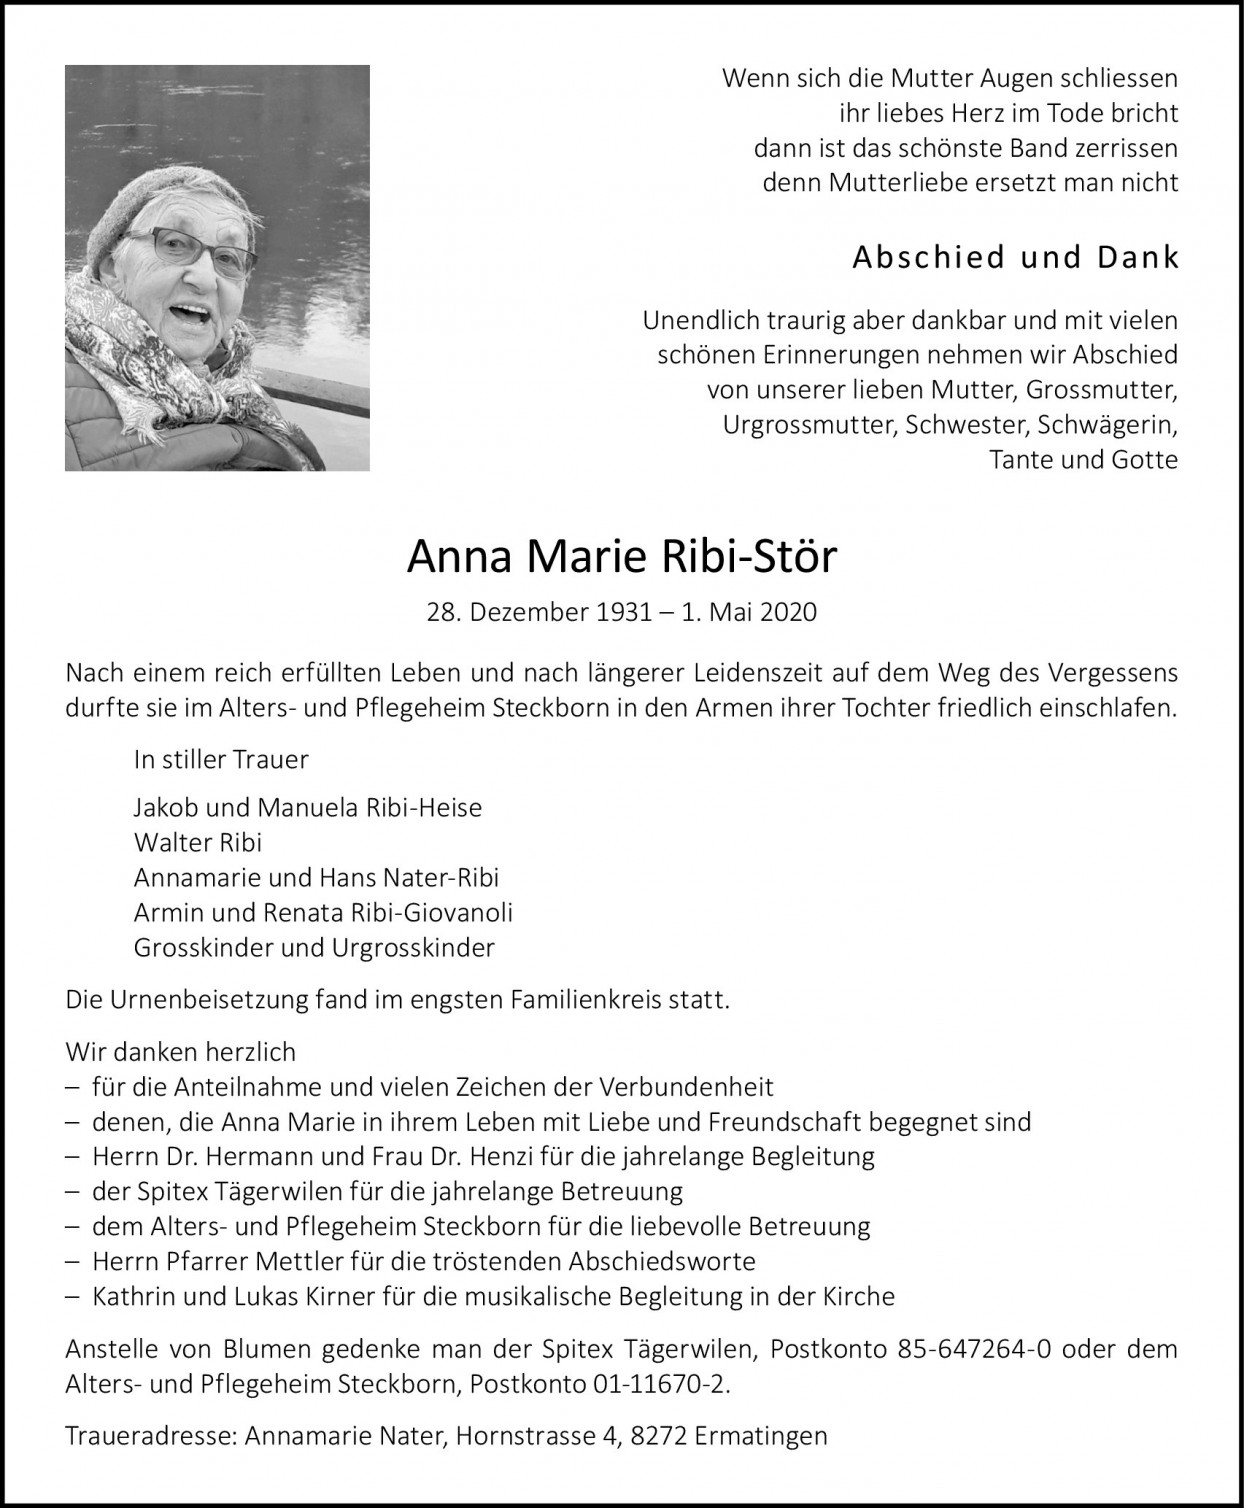 Anna Marie Ribi-Stör